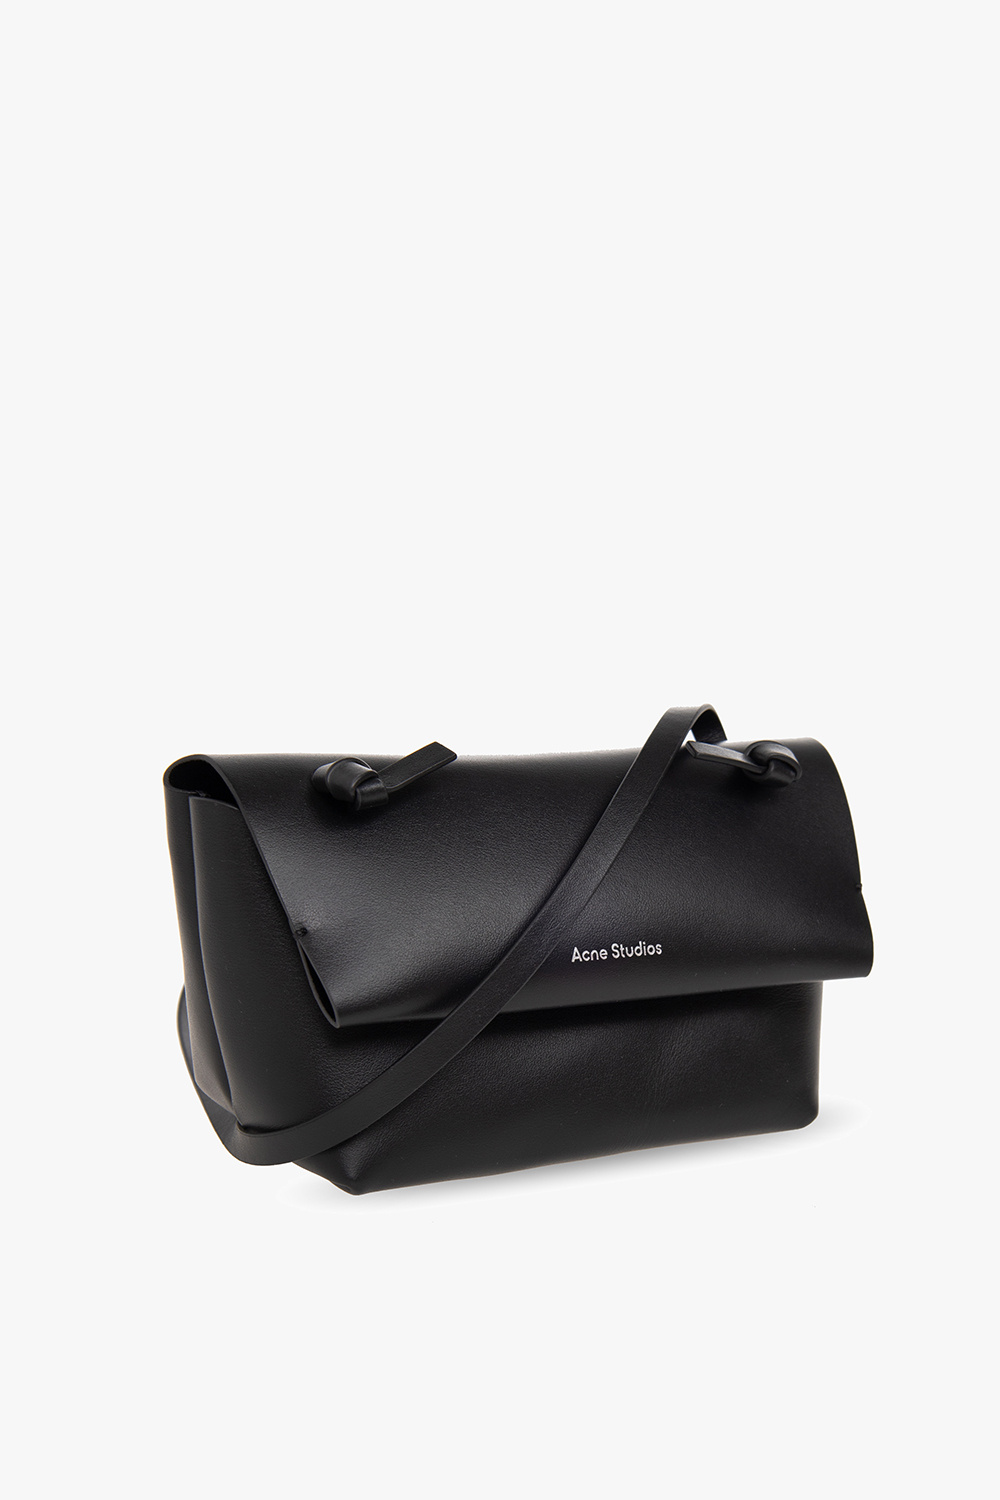 Shop Louis Quatorze Unisex Street Style Leather Crossbody Bag Logo by  K-ARCHE